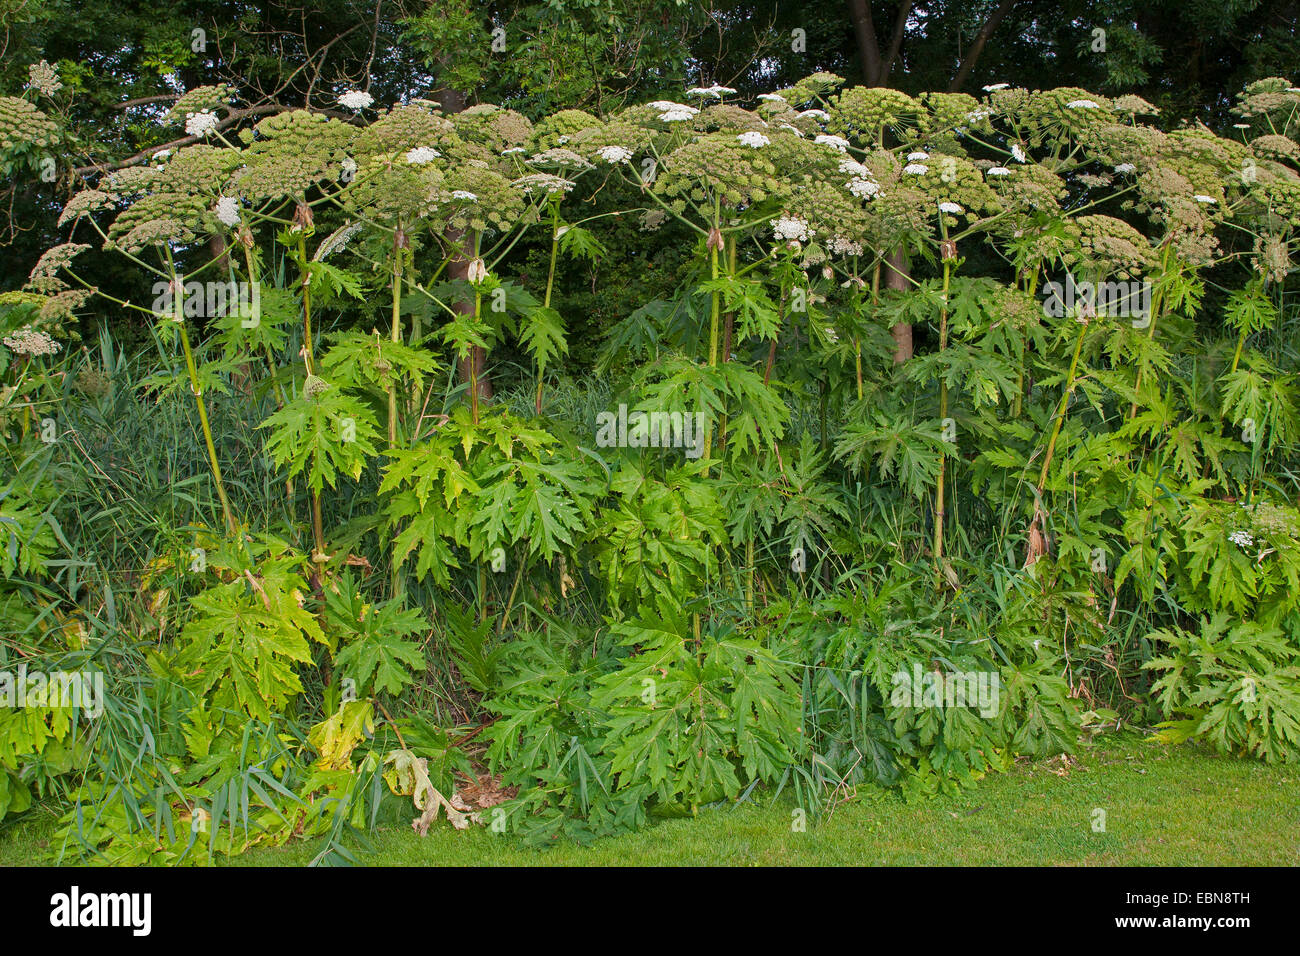 Giant hogweed (Heracleum mantegazzianum), blooming plants, Germany Stock Photo